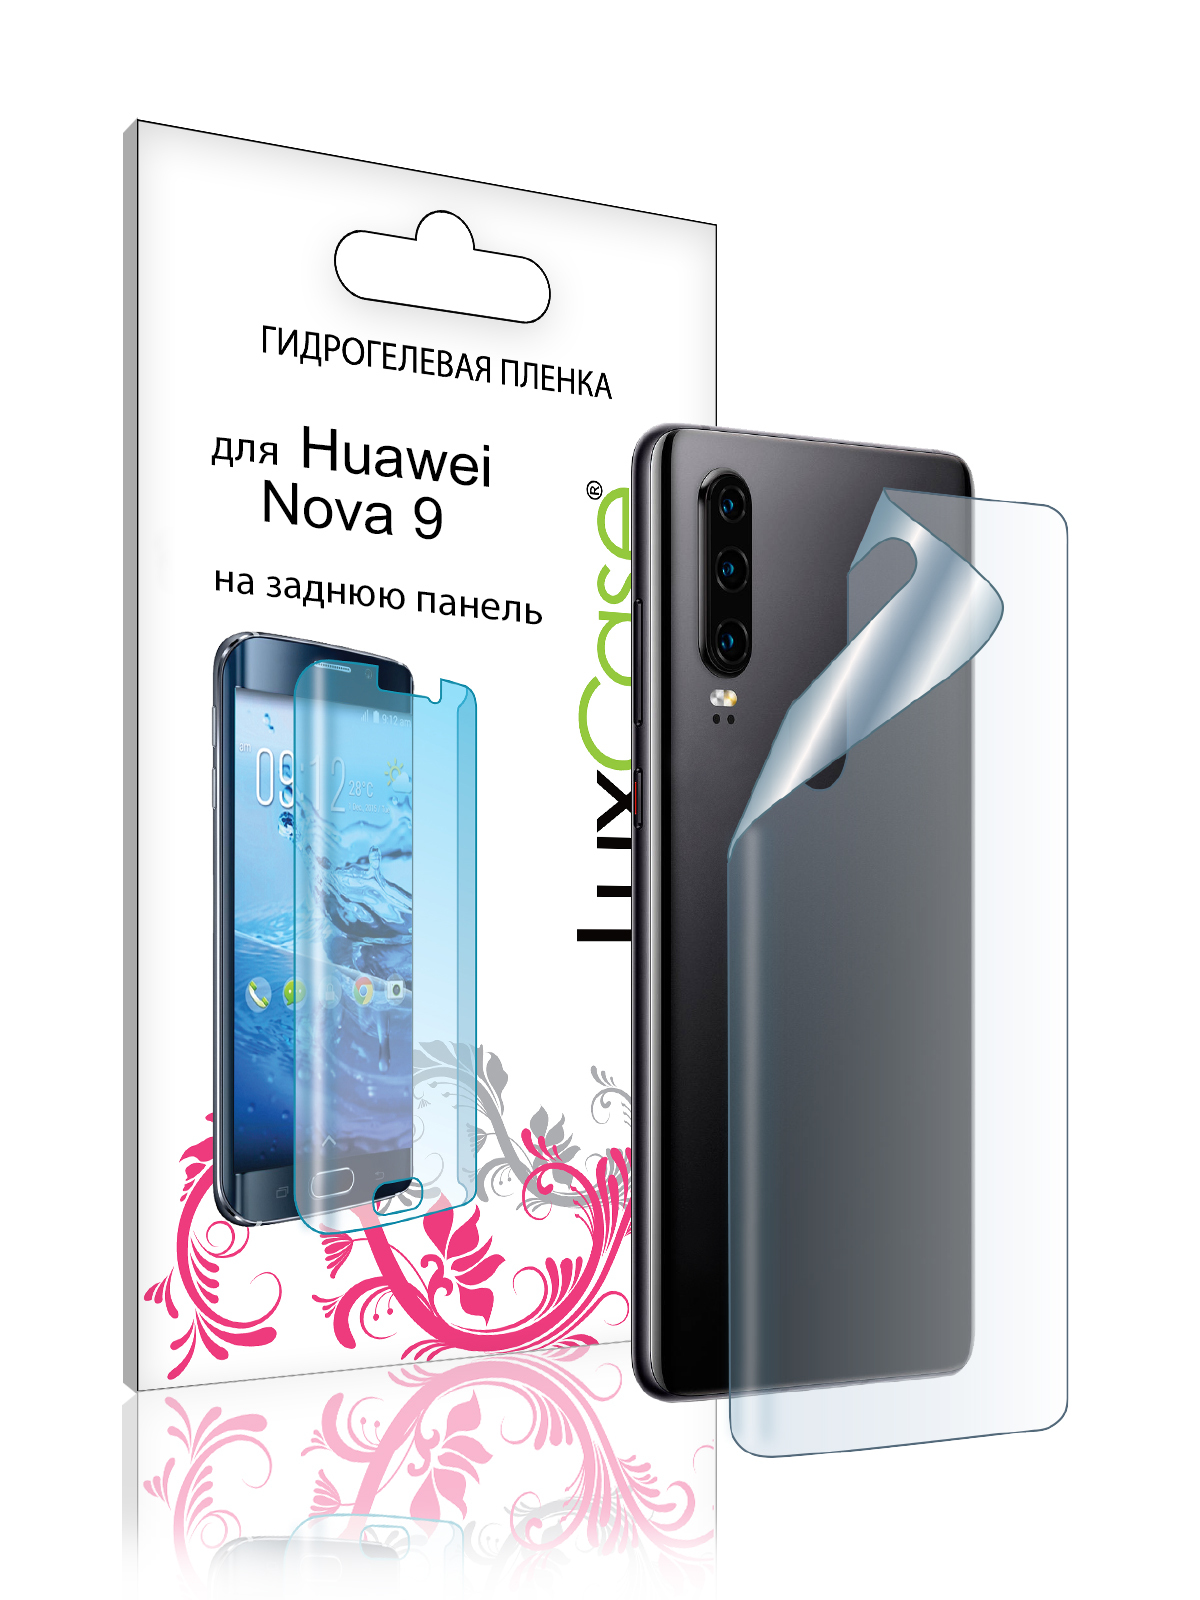 гидрогелевая пленка luxcase для huawei nova 9 0 14mm transparent back 89876 Гидрогелевая пленка LuxCase для Huawei Nova 9 0.14mm Transparent Back 89876